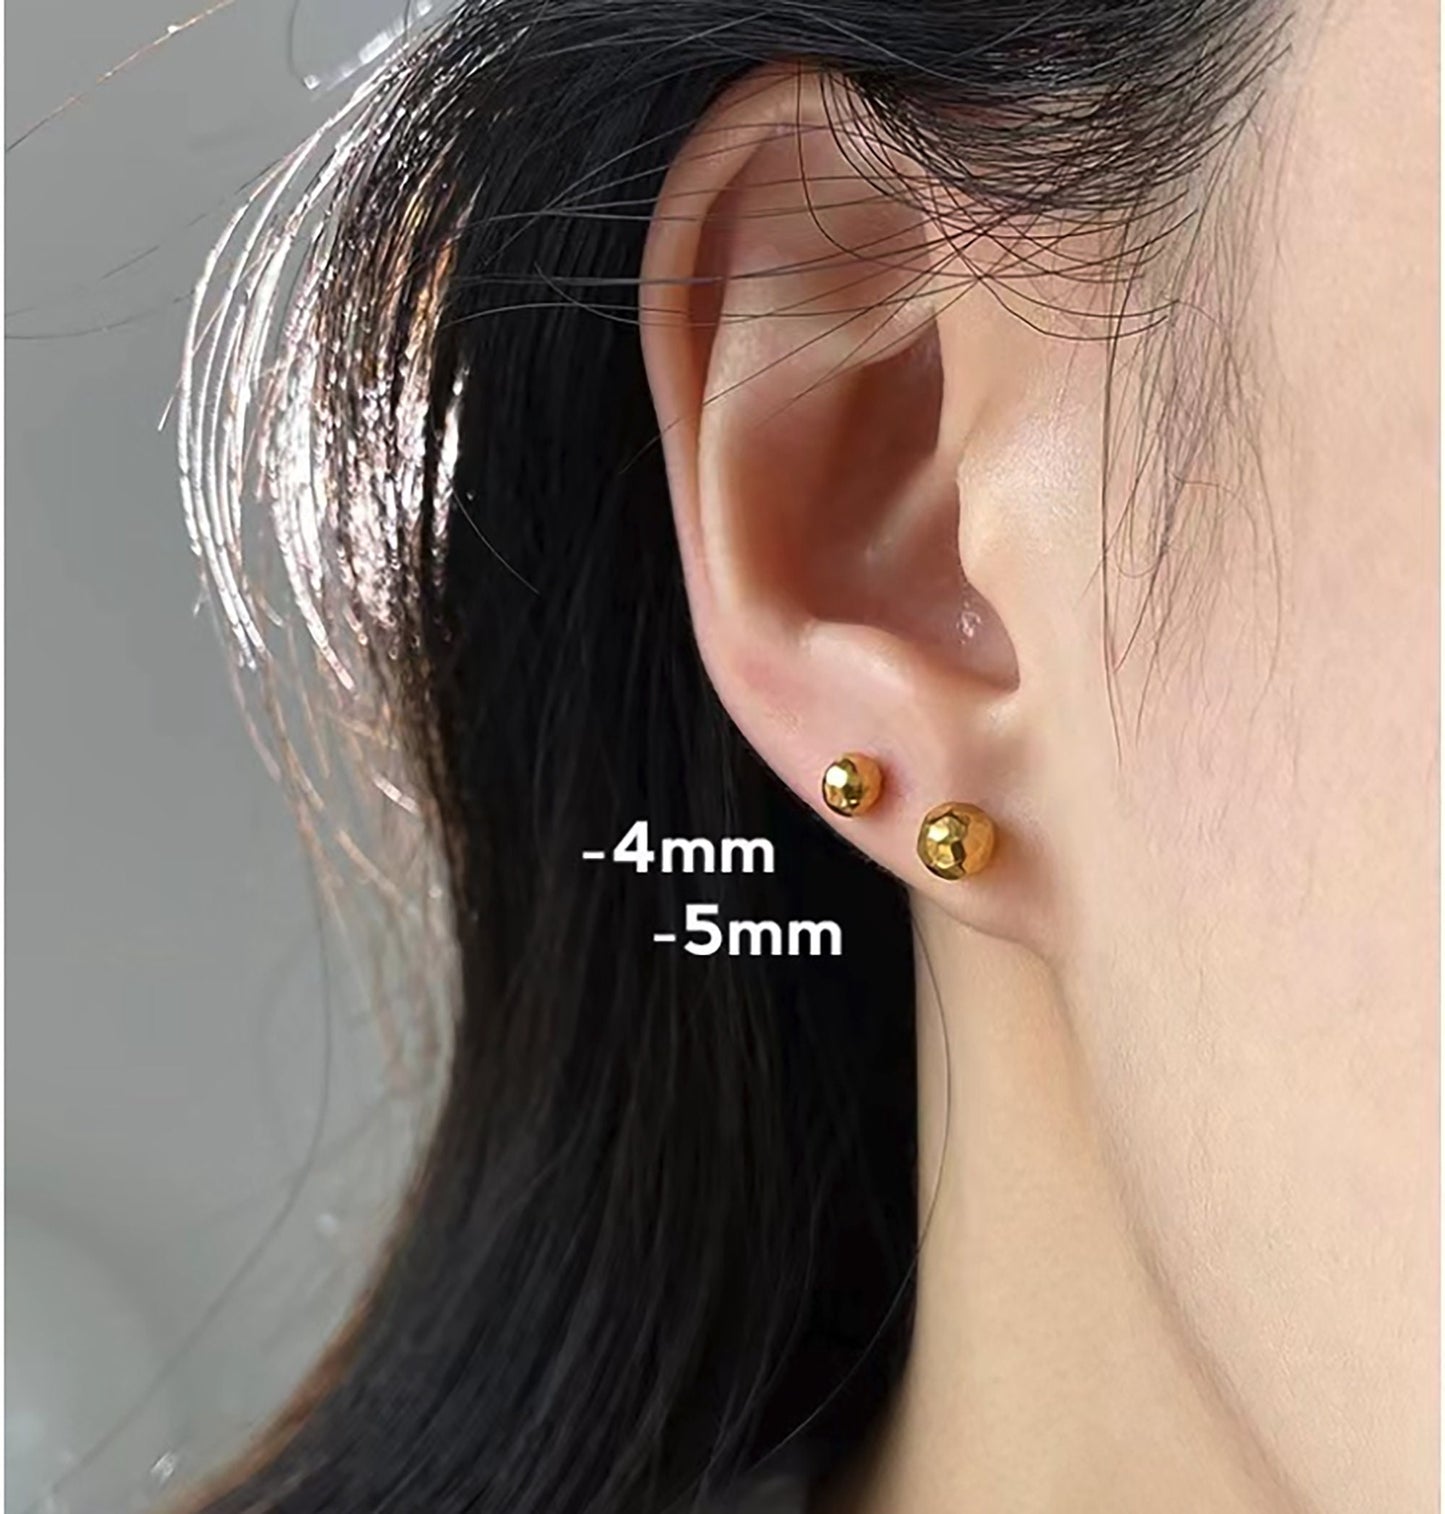 Titanium Ball Stud Earrings, Non Tarnish Earrings, Implant Grade Titanium Waterproof Earrings, Vintage Style Earrings, Minimal Earrings